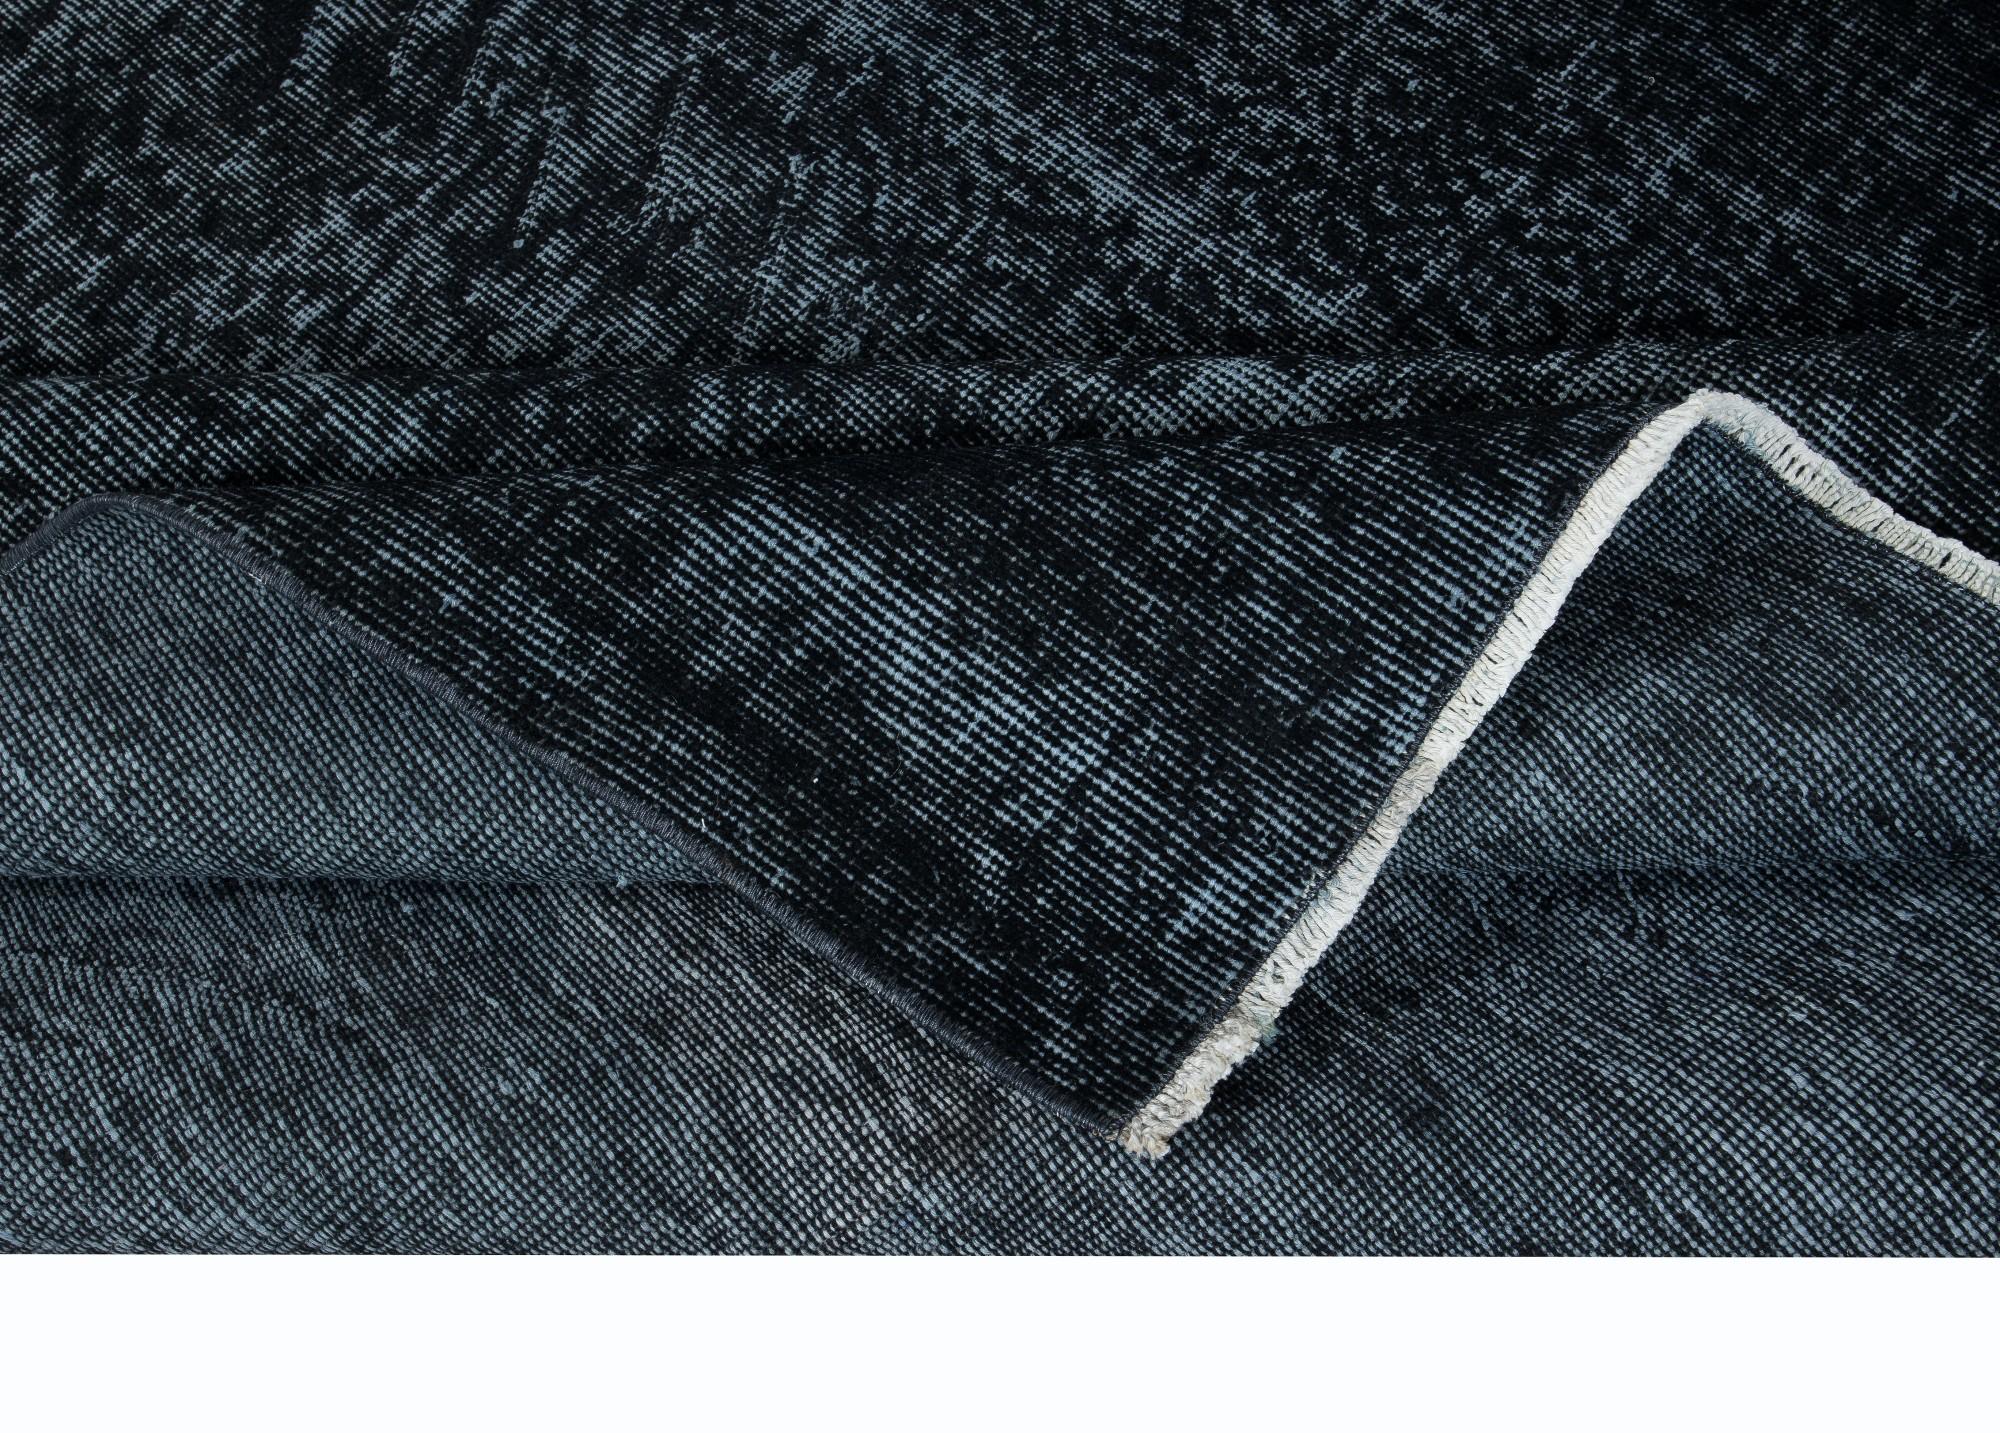 Hand-Woven 5.3x8.7 Ft Handmade Turkish Modern Wool Area Rug in Black & Bluish Black For Sale